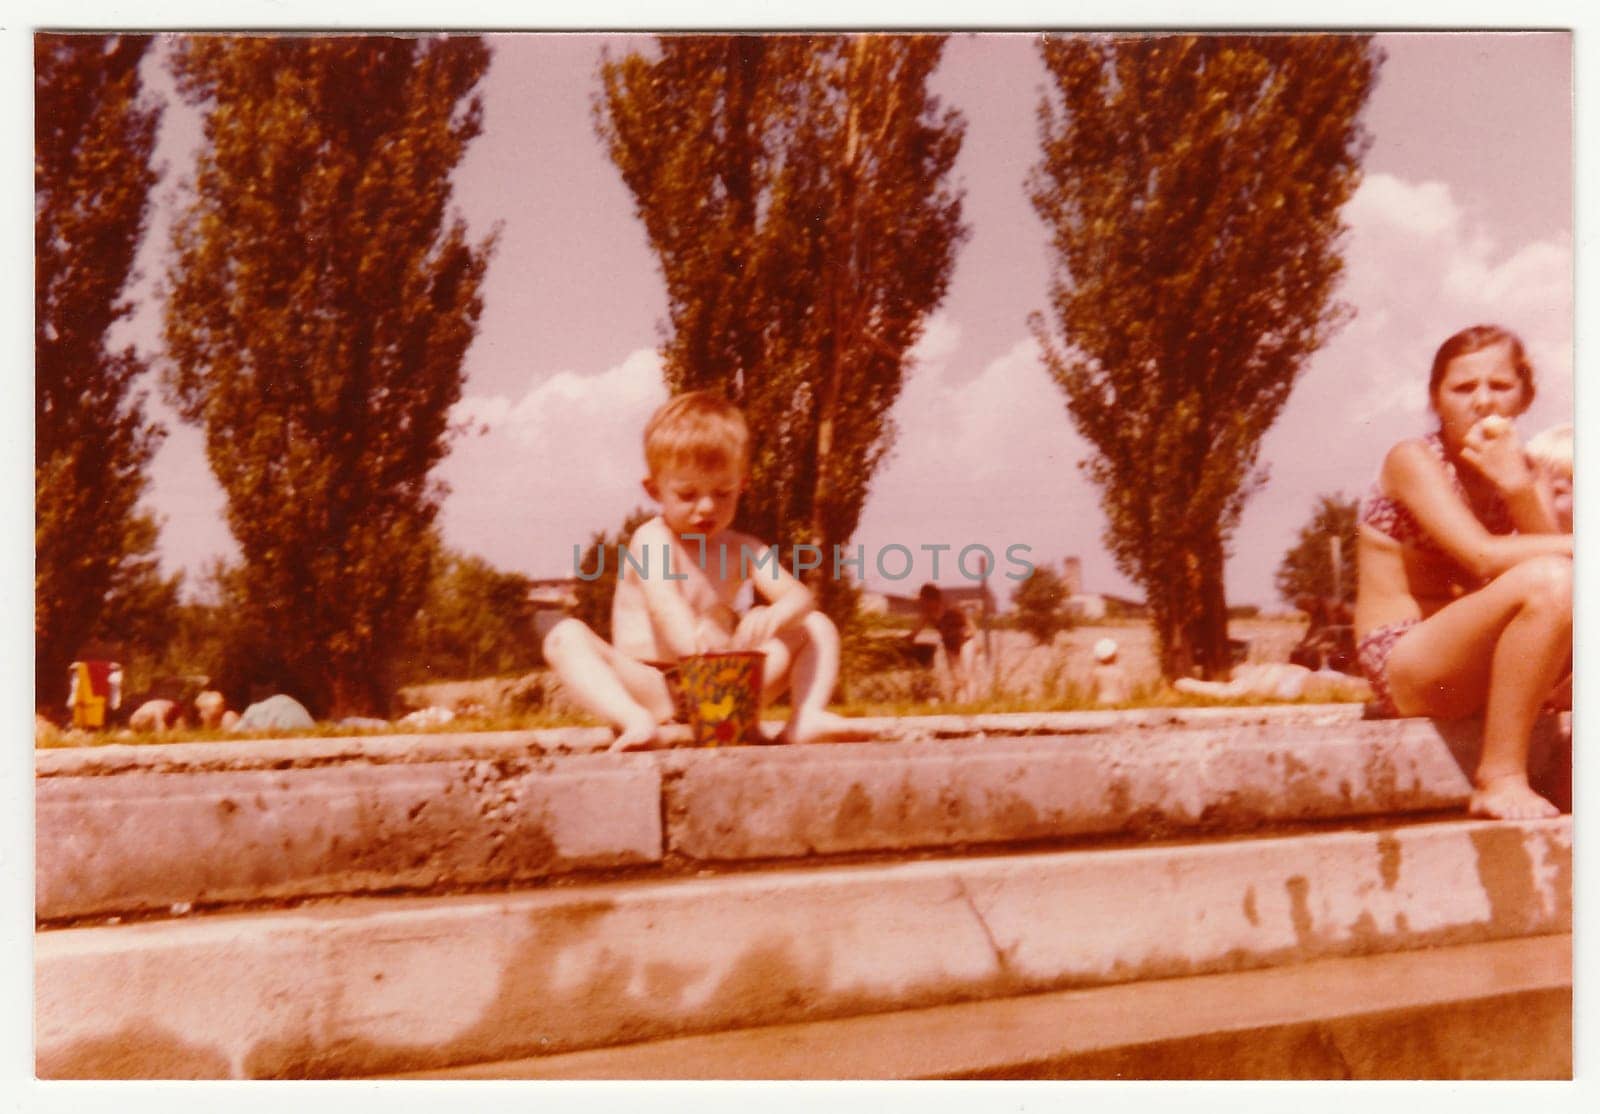 THE CZECHOSLOVAK SOCIALIST REPUBLIC, CIRCA 1974: Vintage photo shows a small boy on a public swimming pool, circa 1974.